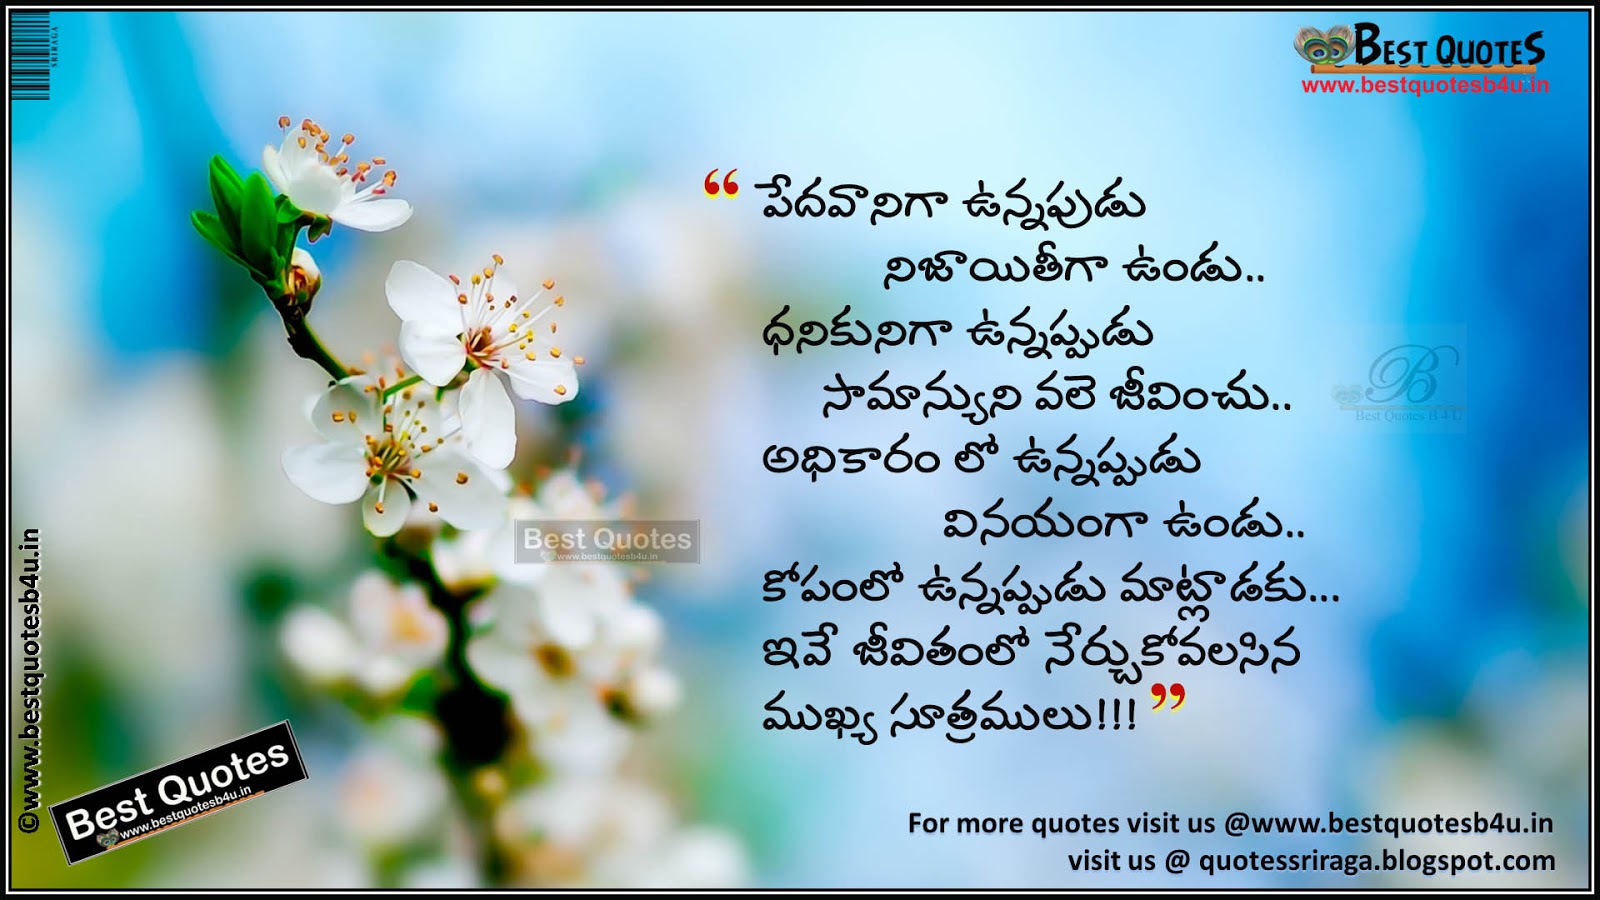 Telugu Inspirational Life quotations HD Wallpapers | Like Share Follow